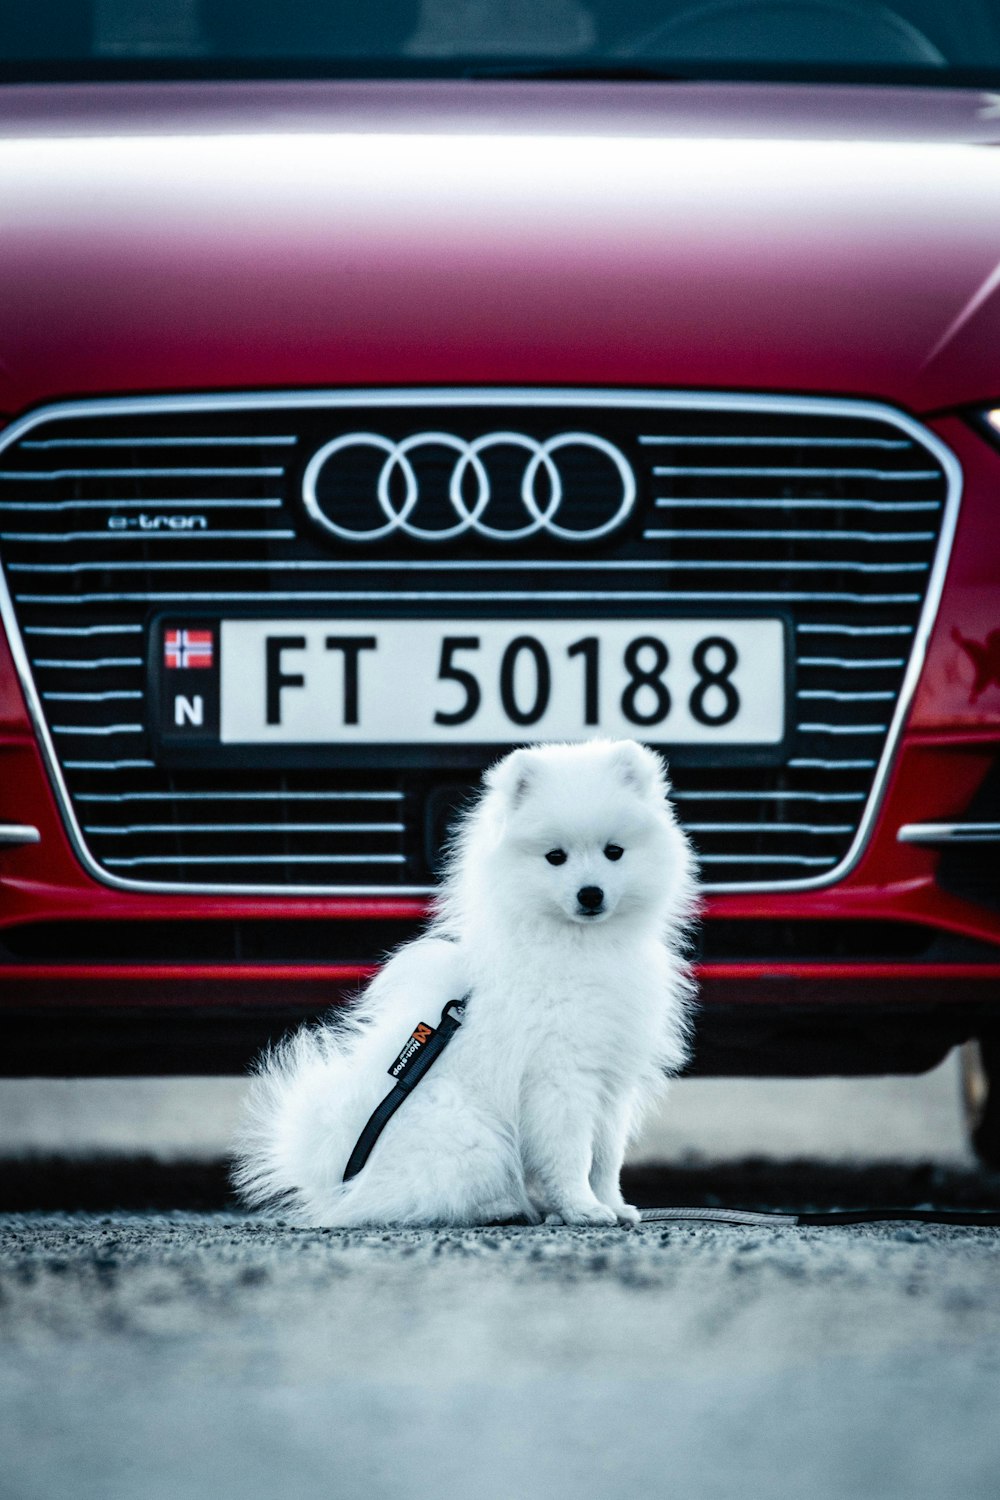 white long fur cat on red car